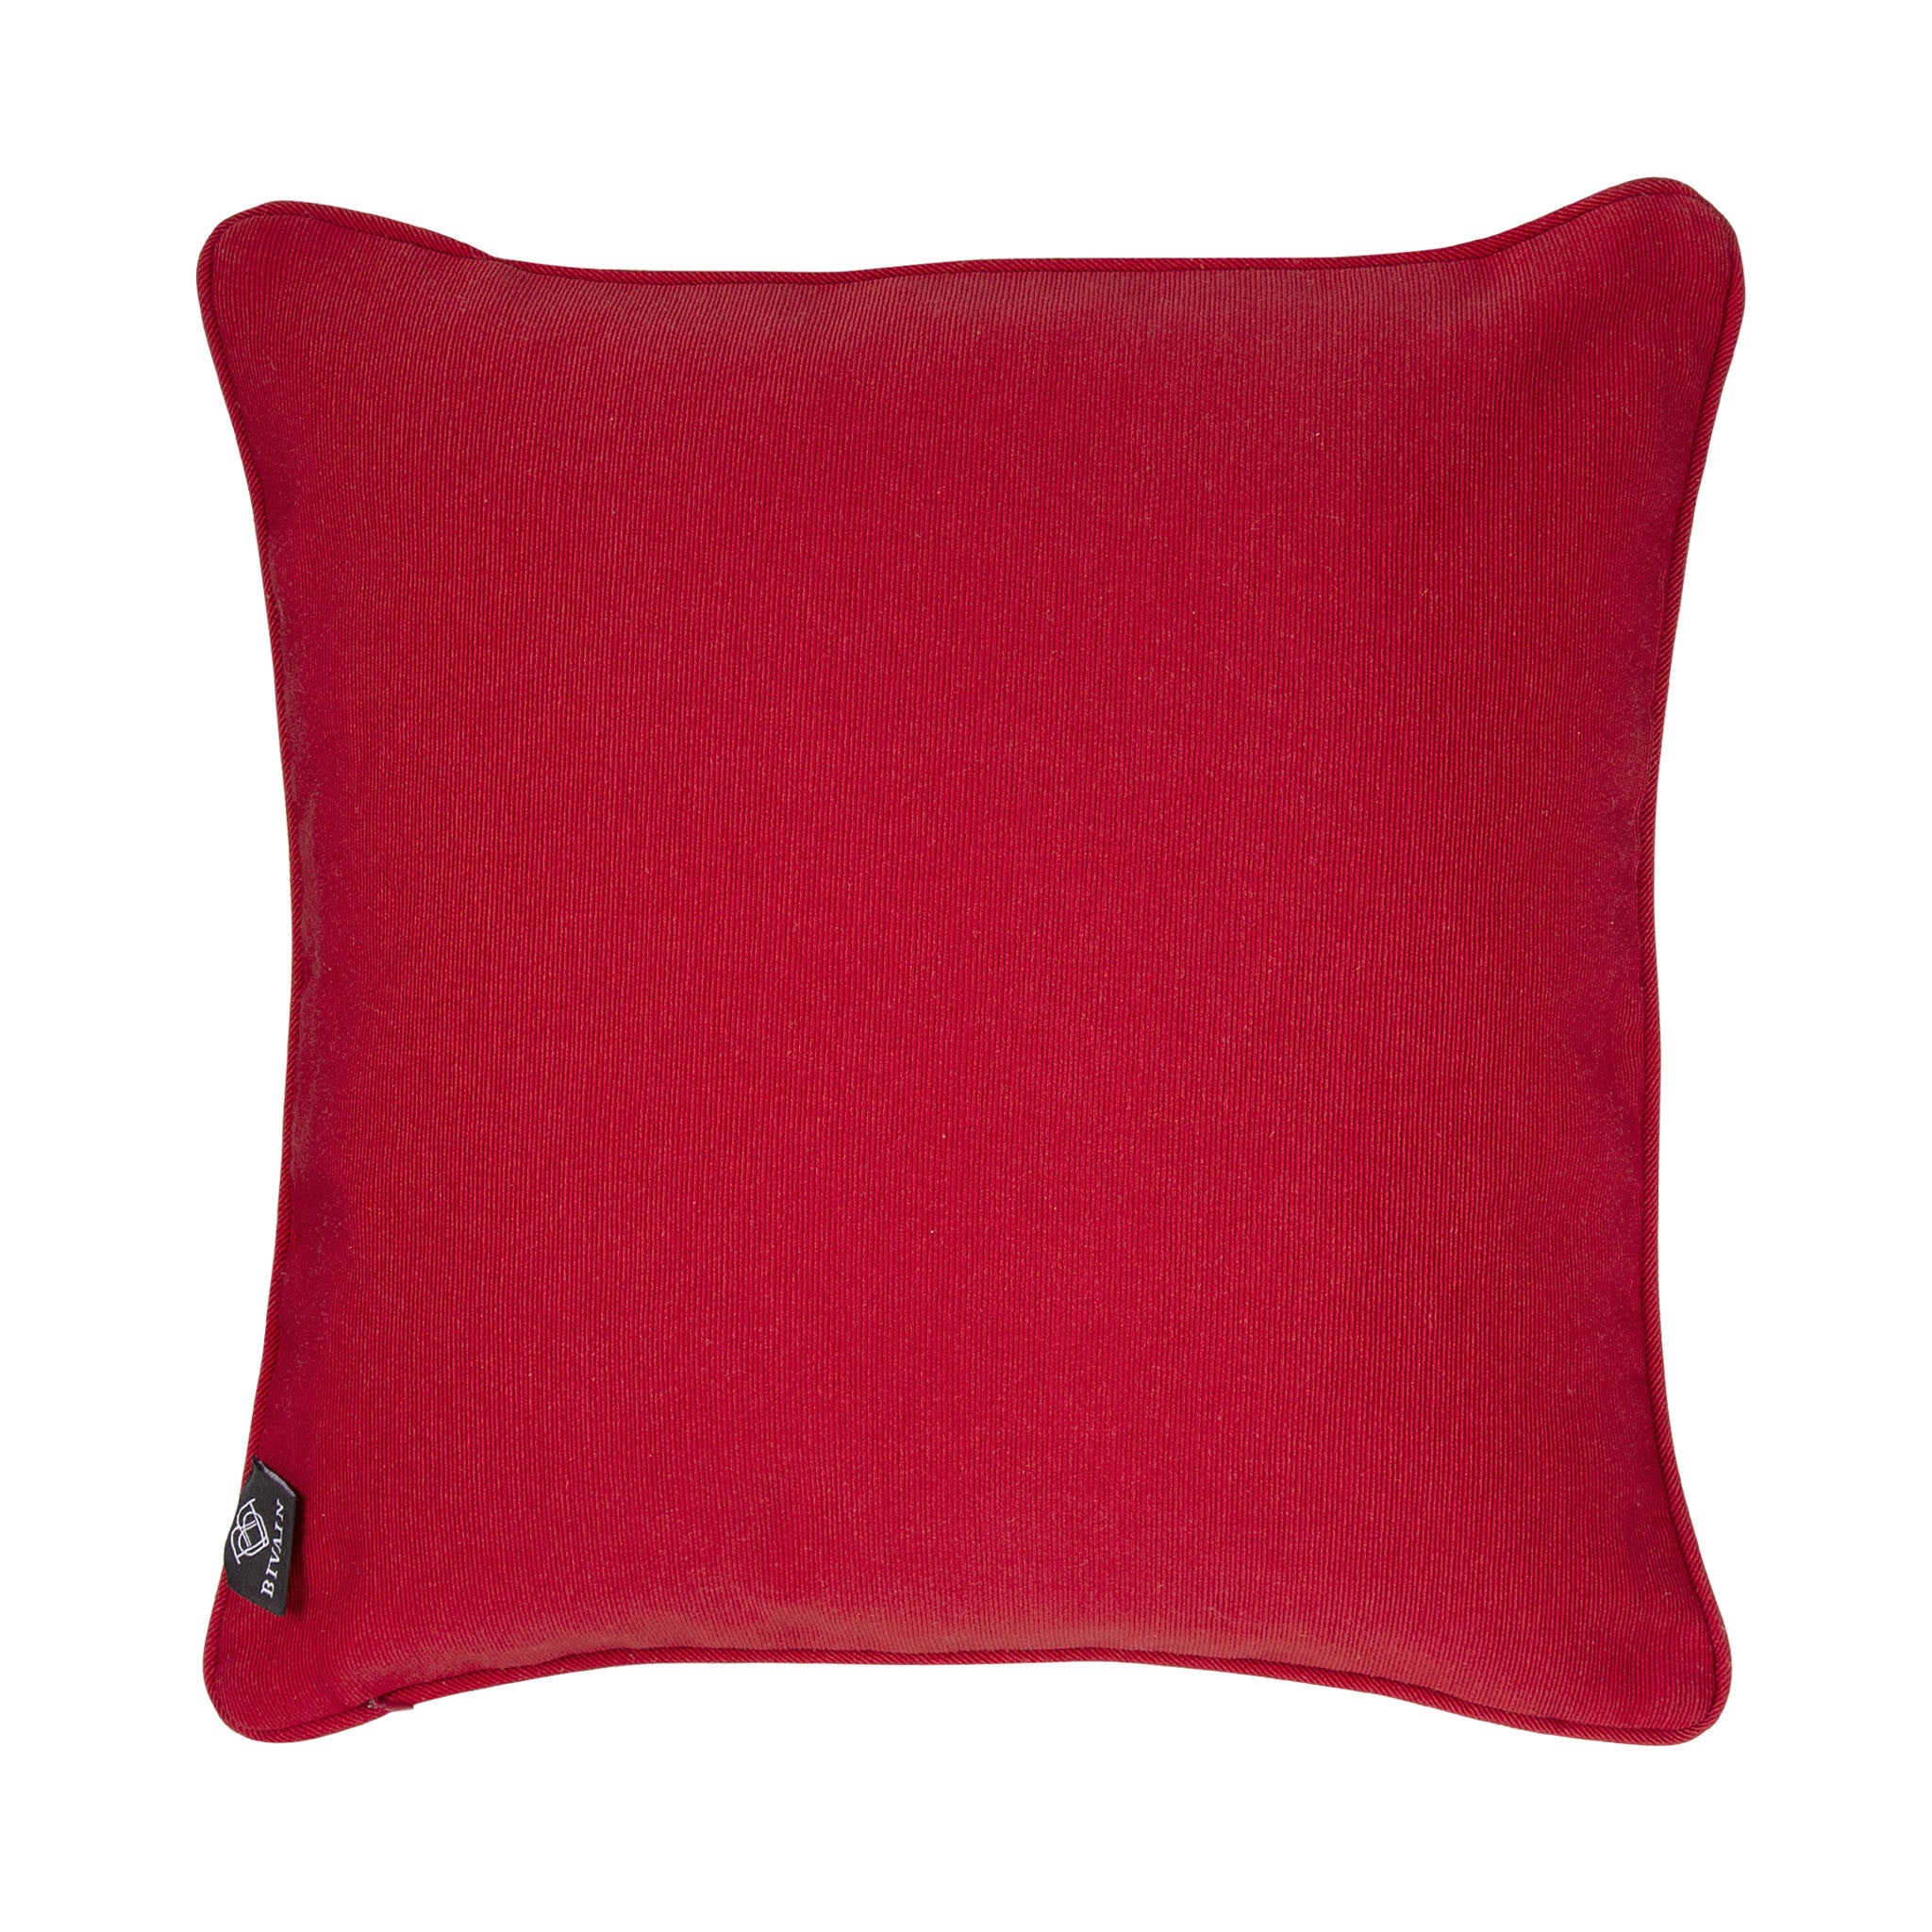 Silk twill blue & red Chinese knot print cushion - Bivain - 3